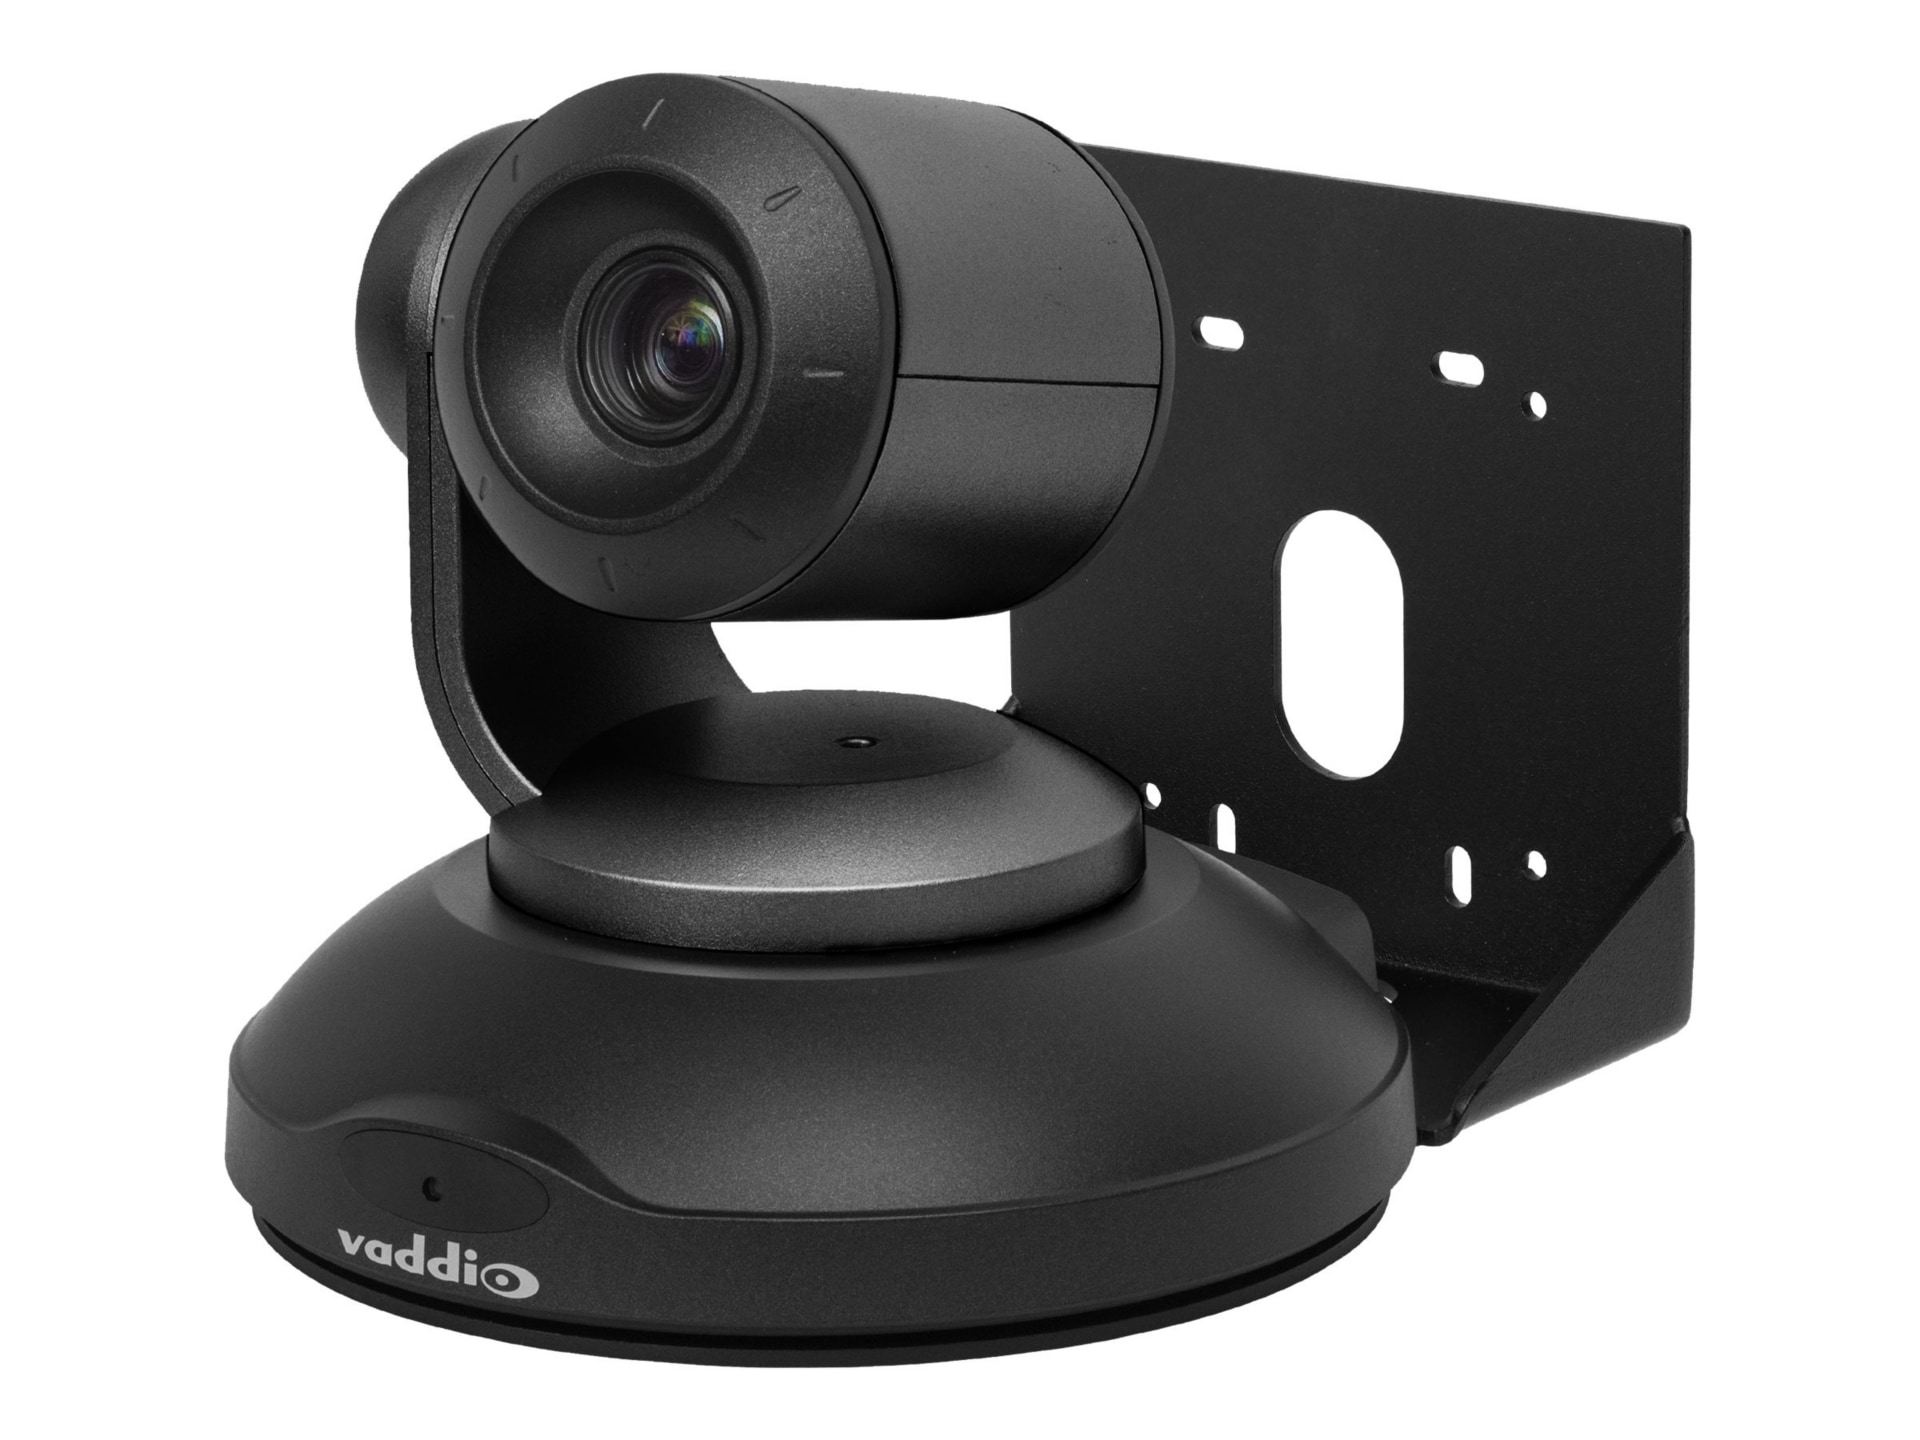 Vaddio ConferenceSHOT AV HD Video Conferencing System - Includes PTZ Camera